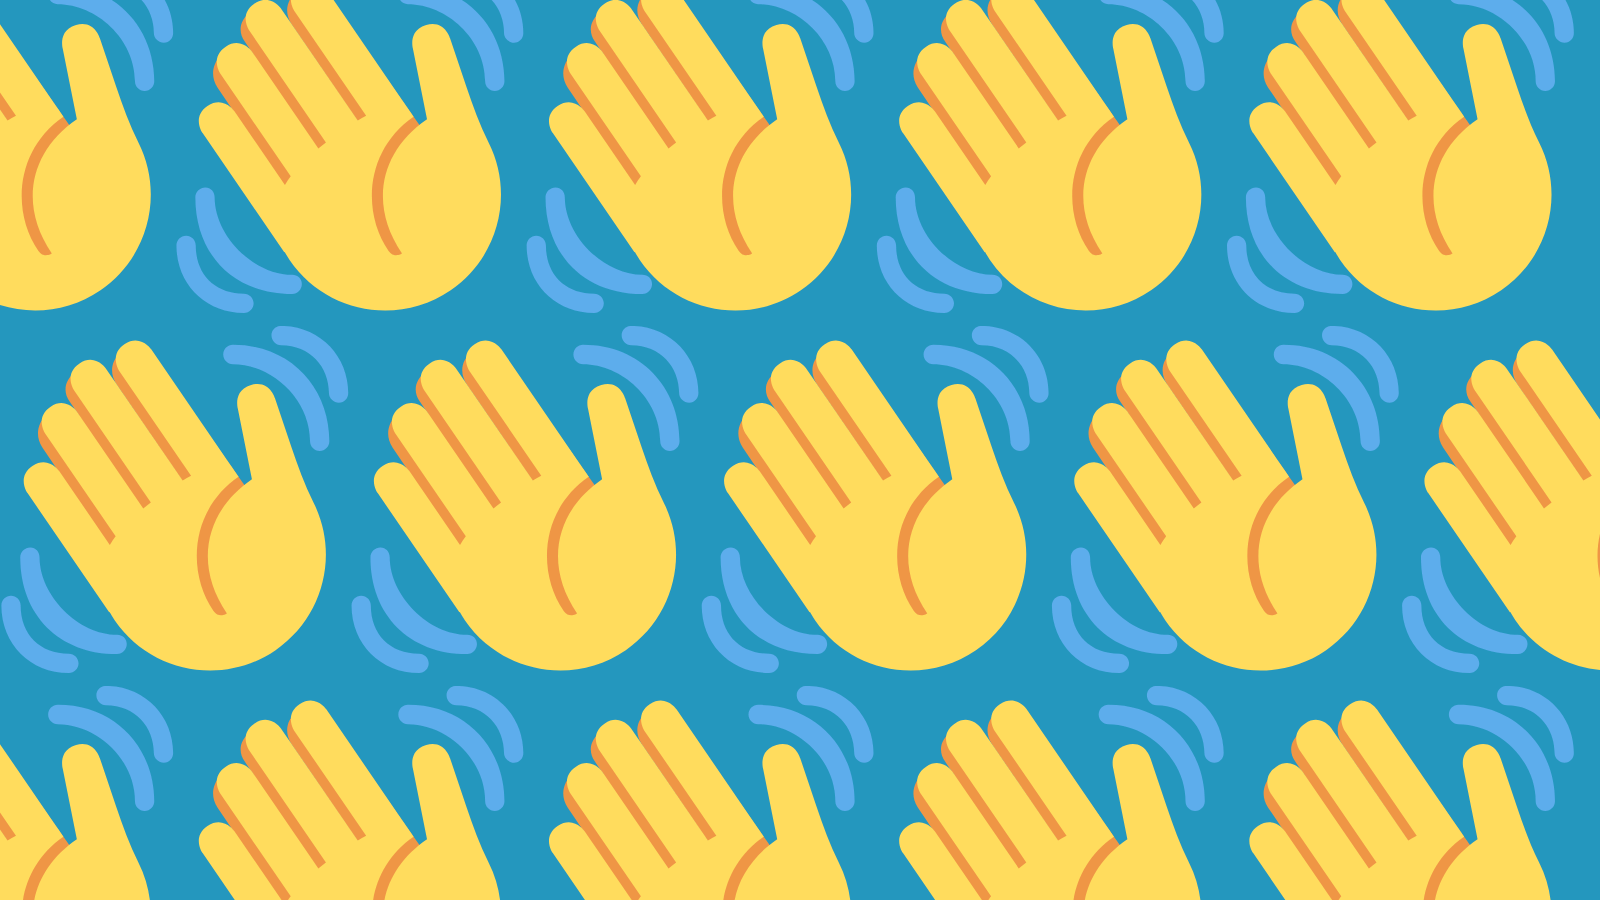 Waving hand emojis